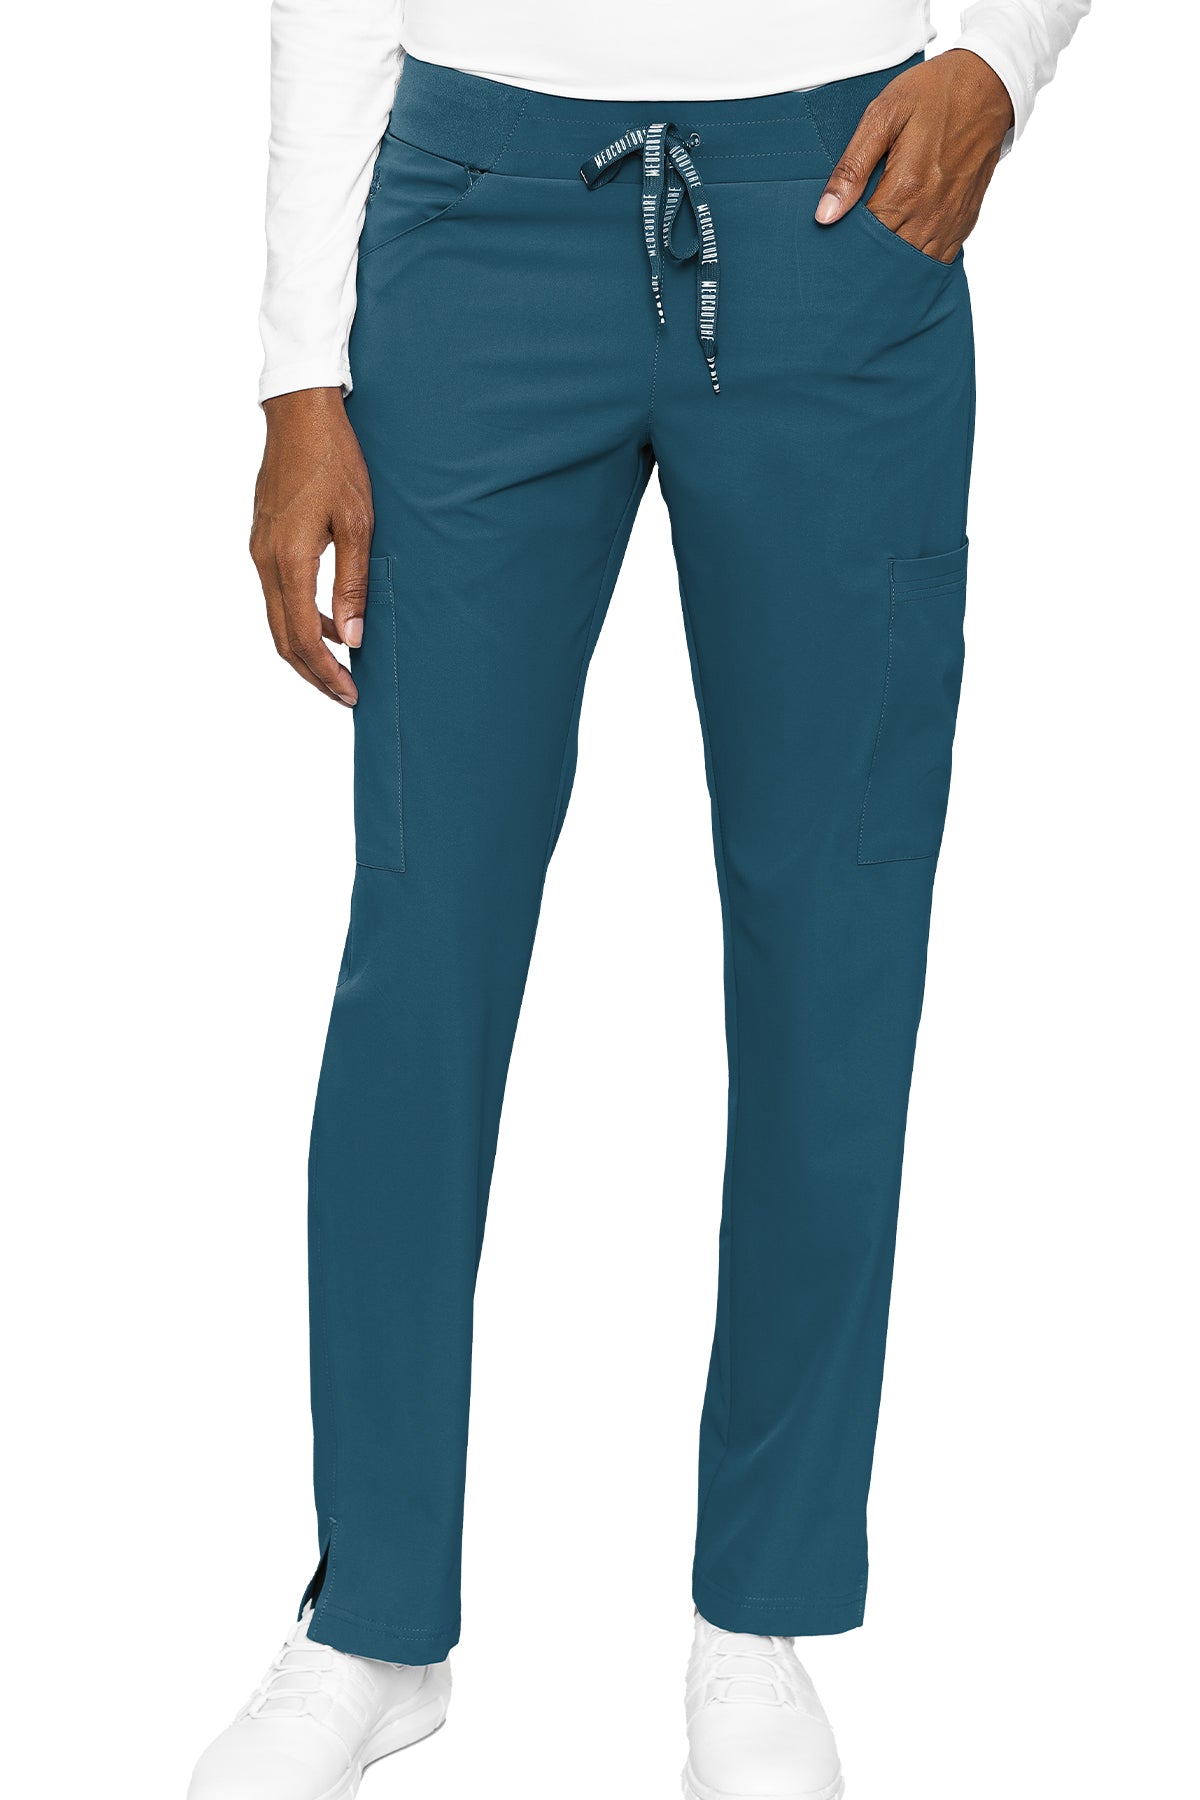 Scoop Pocket Pant XS-3XL Regular Med Couture / Caribbean